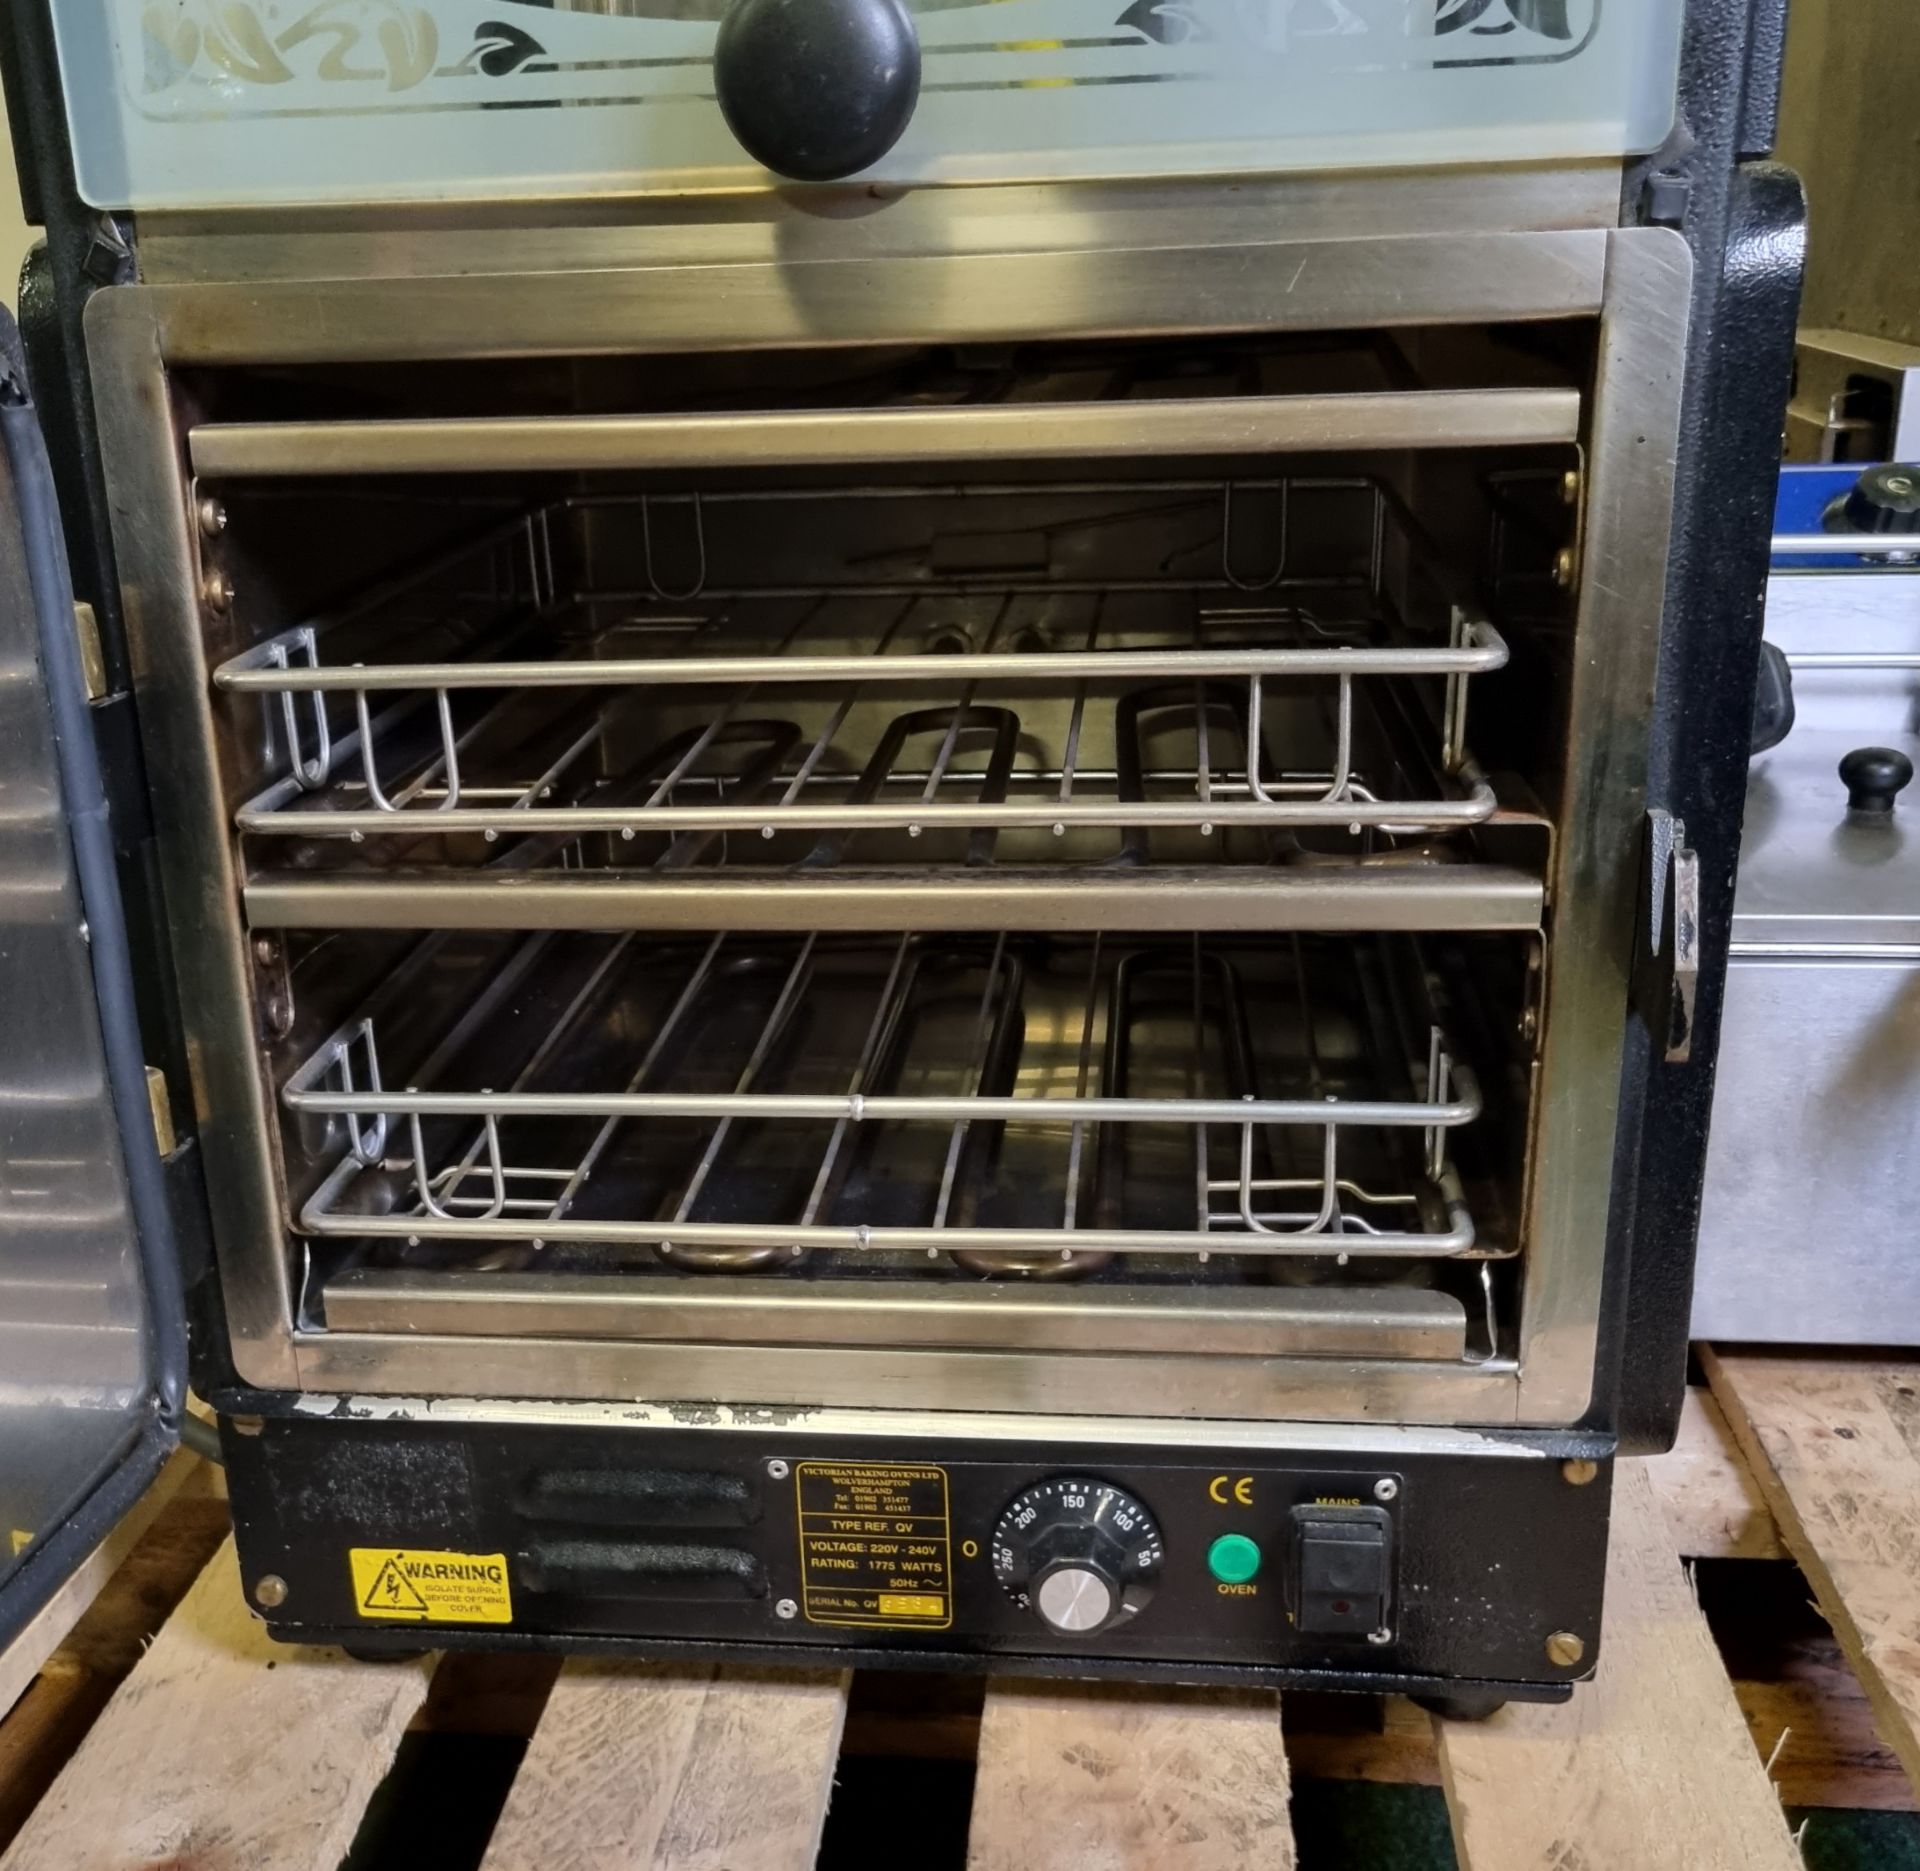 Victorian Baking Ovens QV potato oven - black - W 450 x D 500 x H 750mm - Image 3 of 5